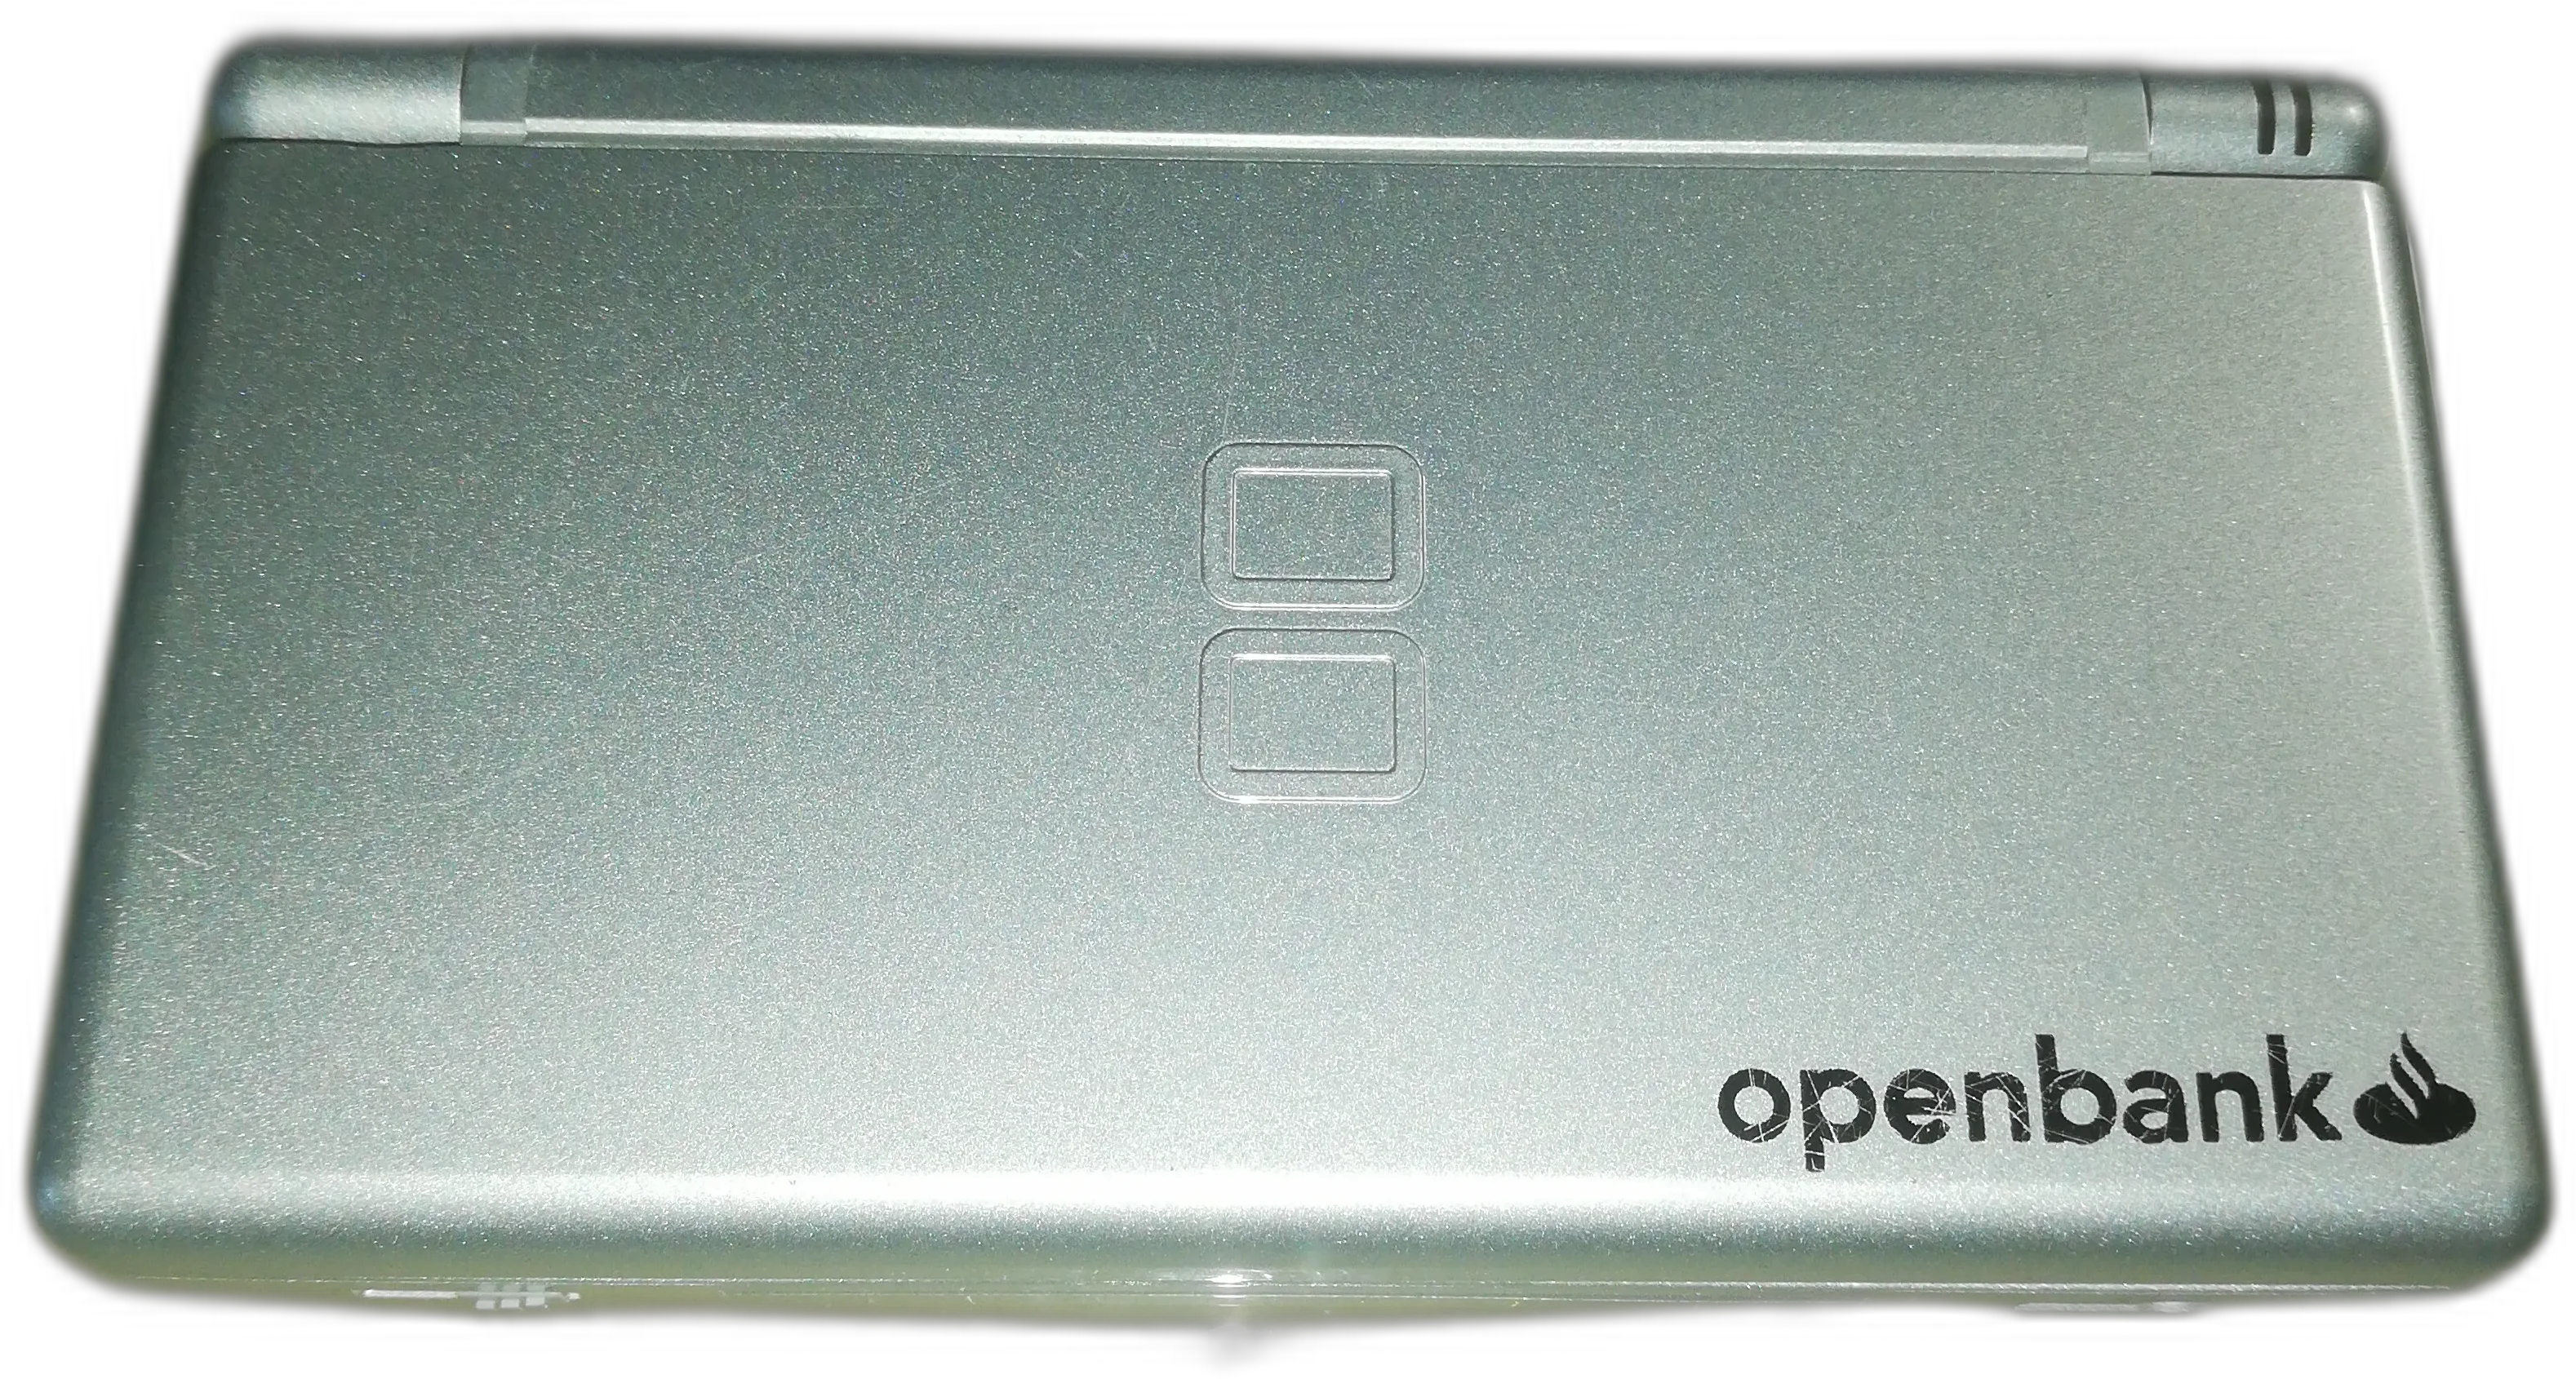  Nintendo DS Lite Openbank Console